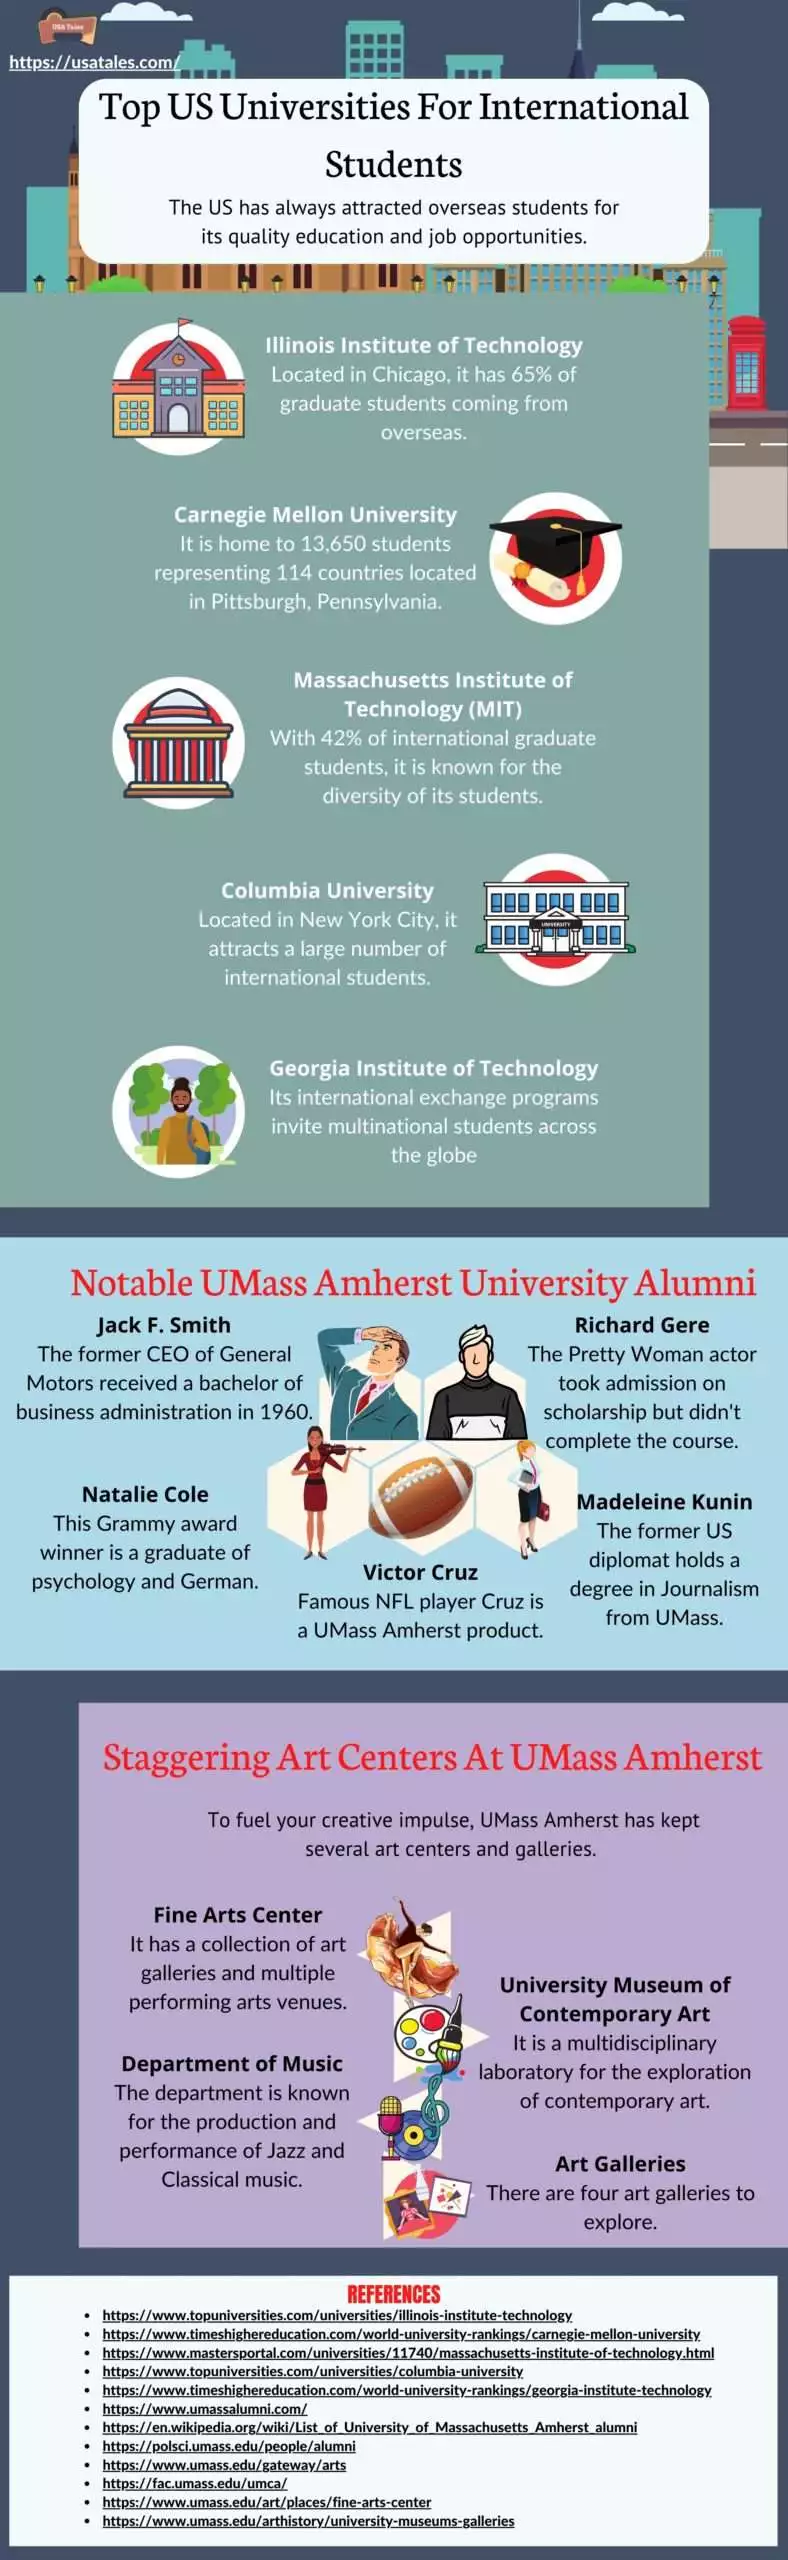 Top US Universities For International Students